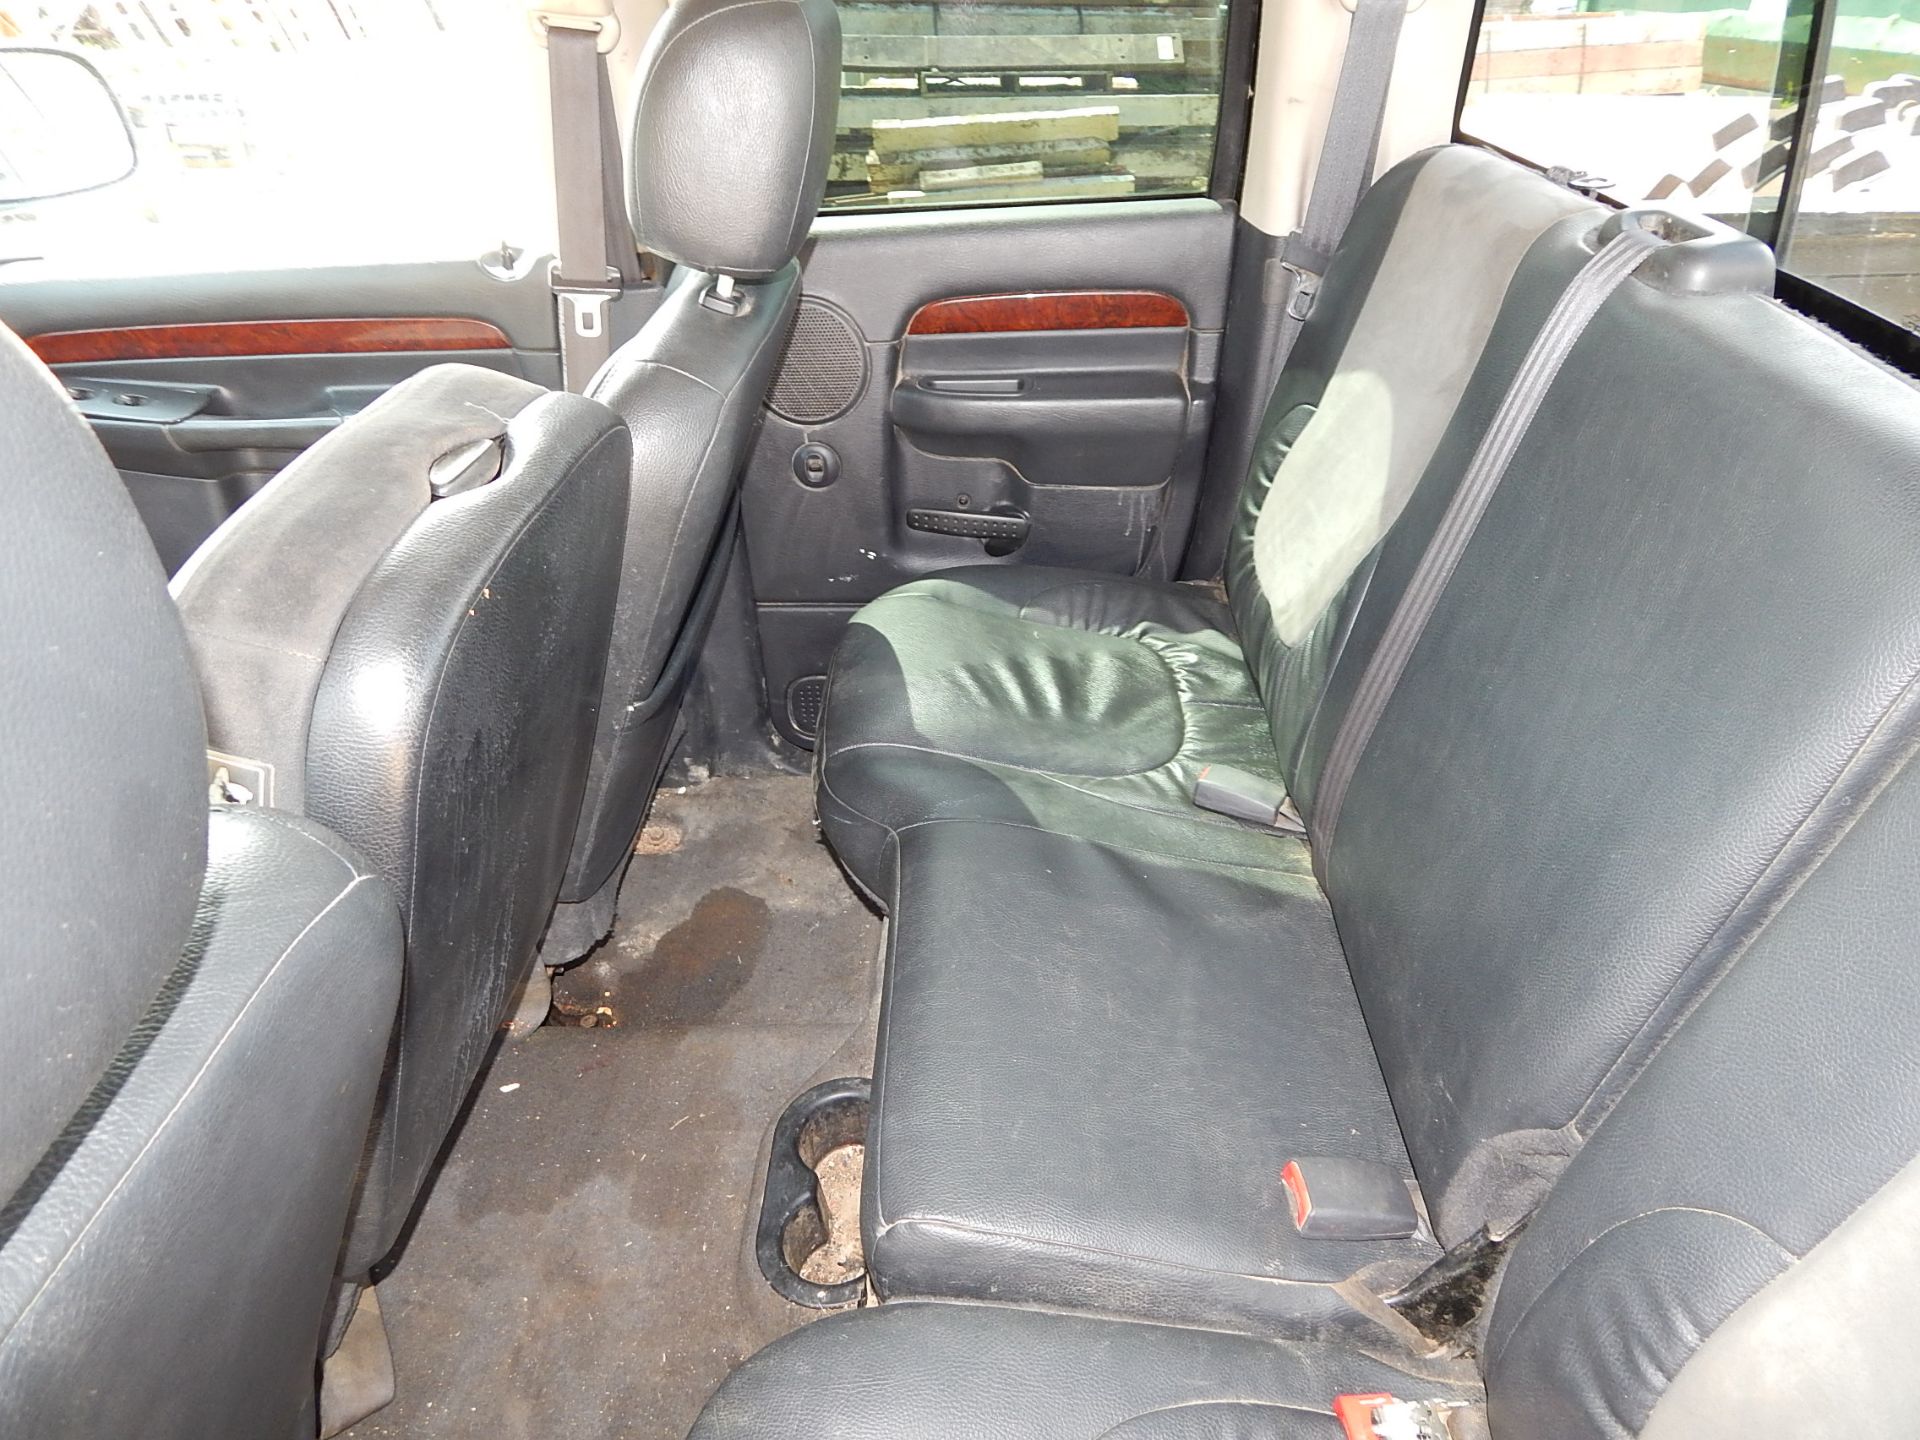 2004 DODGE 3500 4-Door Pickup Truck, Black, Dual Rear Tires, 8 ft. Bed, Auto, VIN 3D7MA48C93G859310, - Image 13 of 22